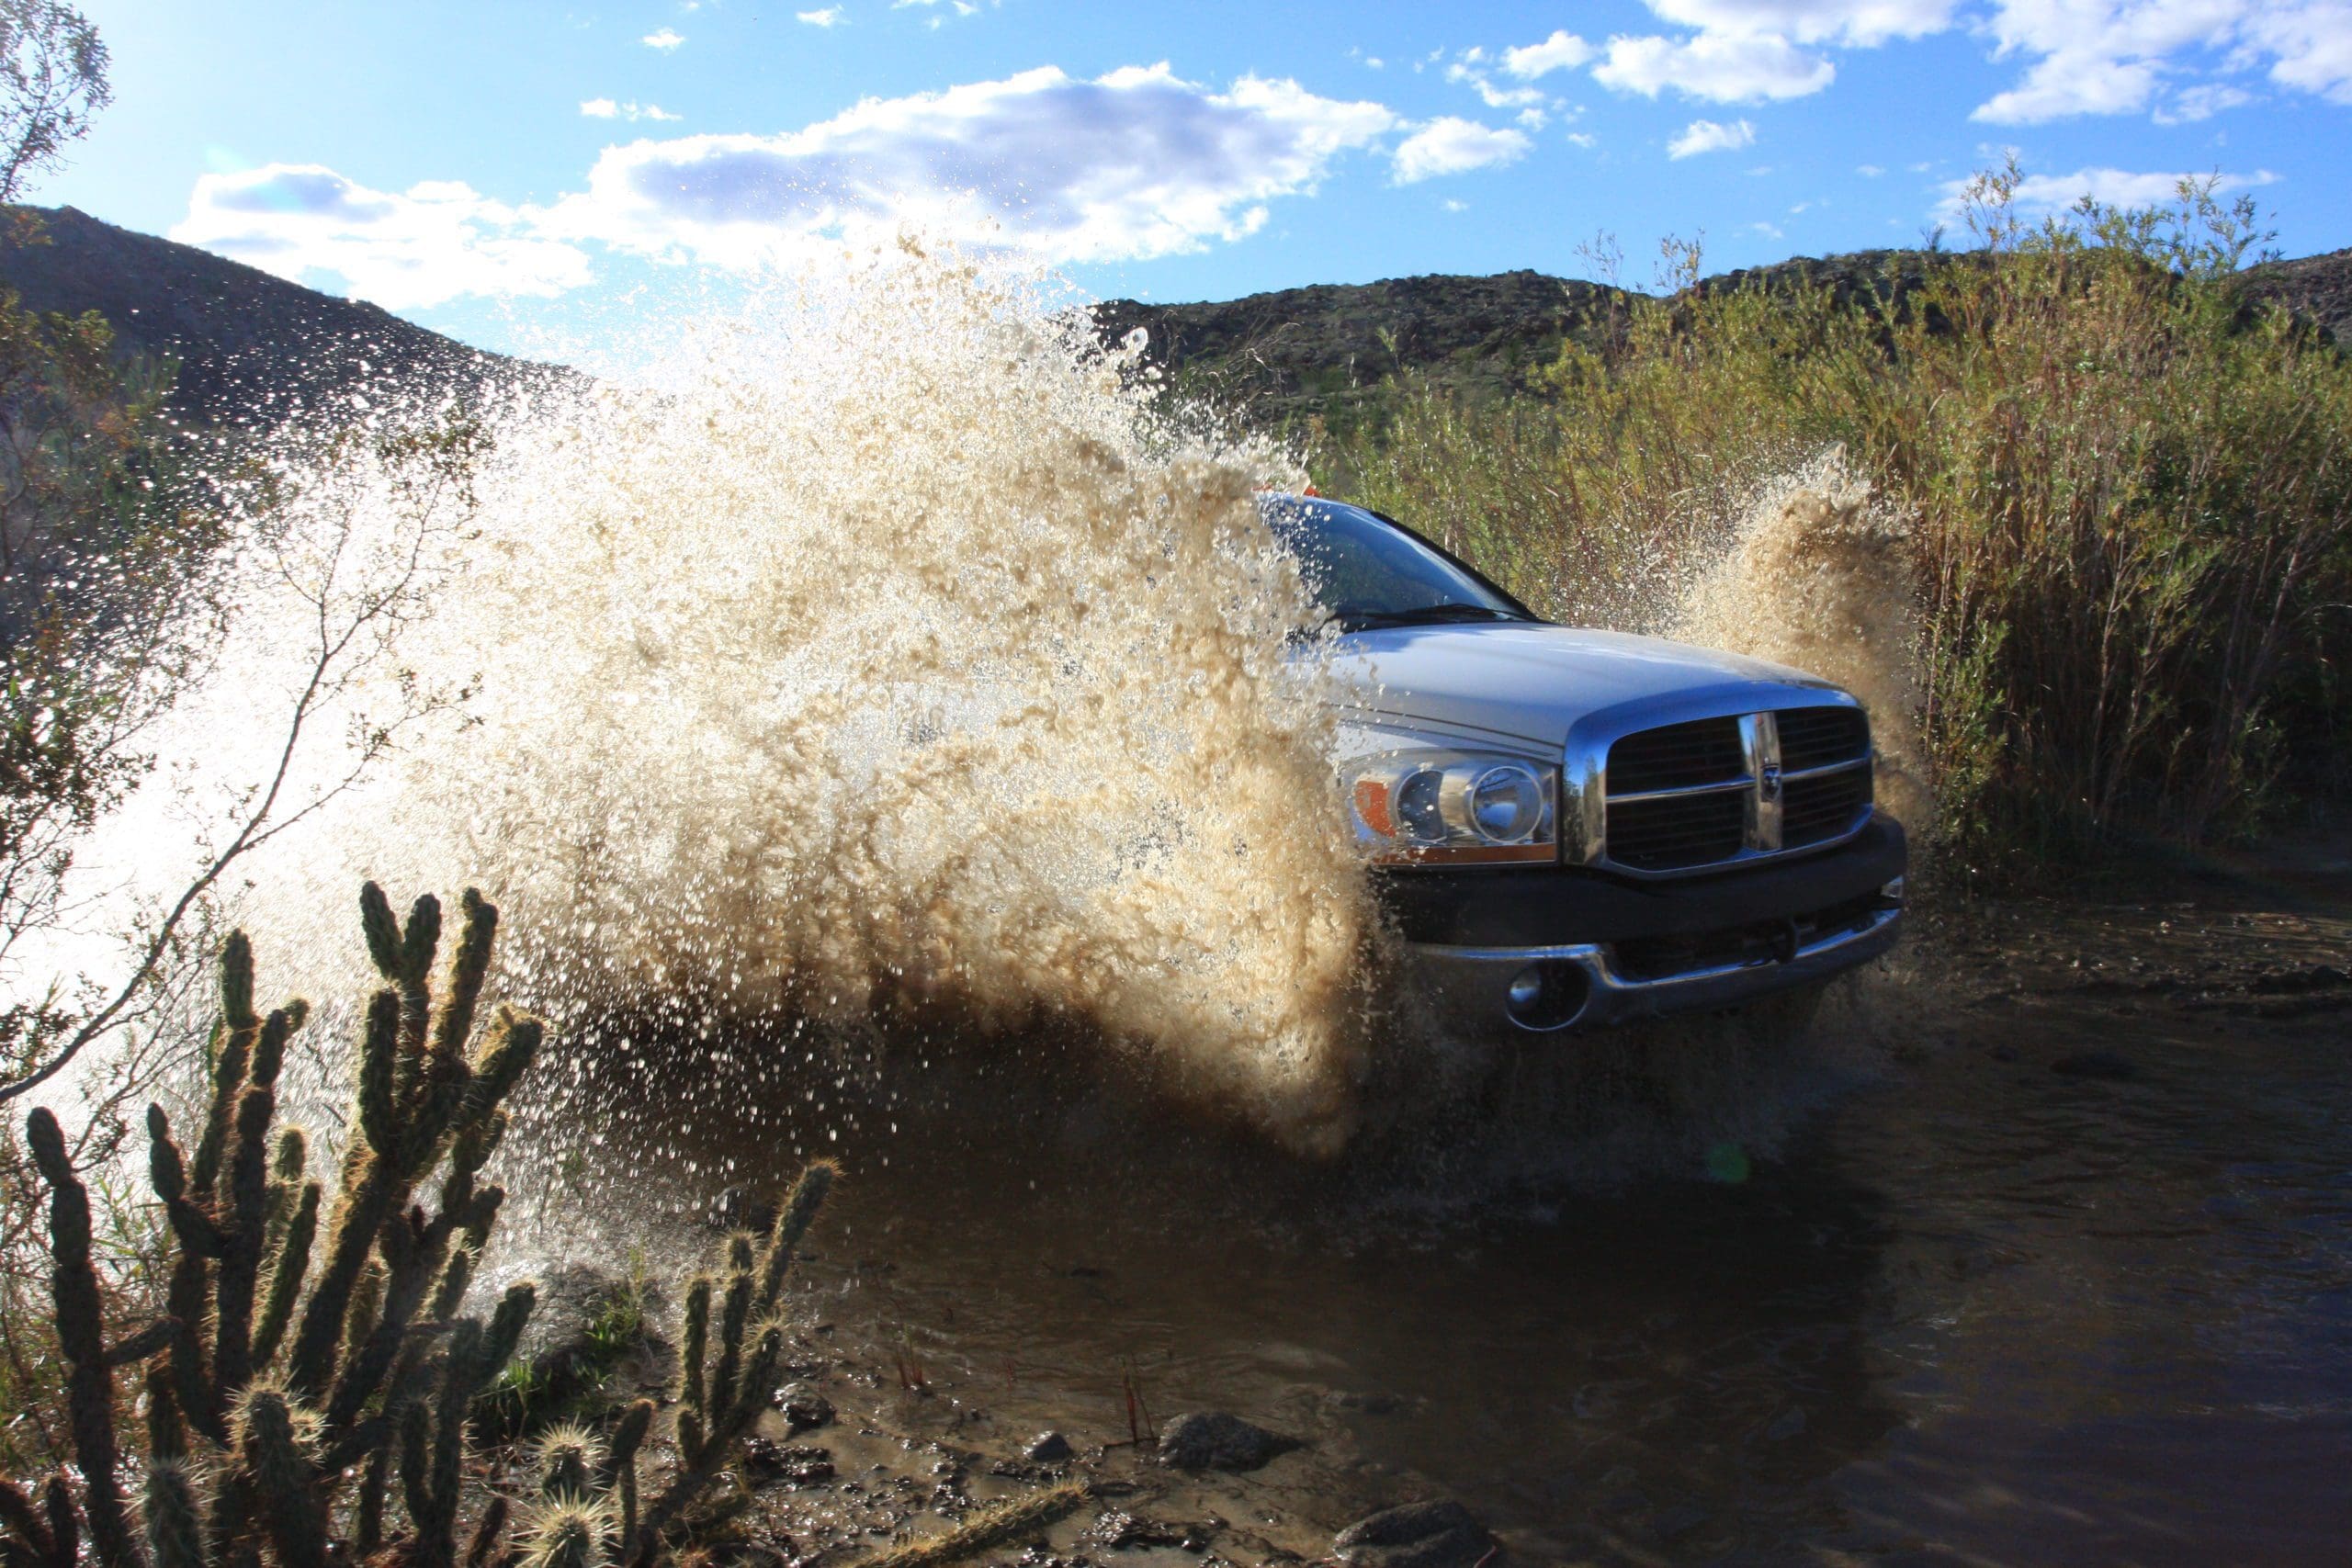 White Dodge Ram truck splashing through a shallow river while off-roading through California coastal sage and chaparral